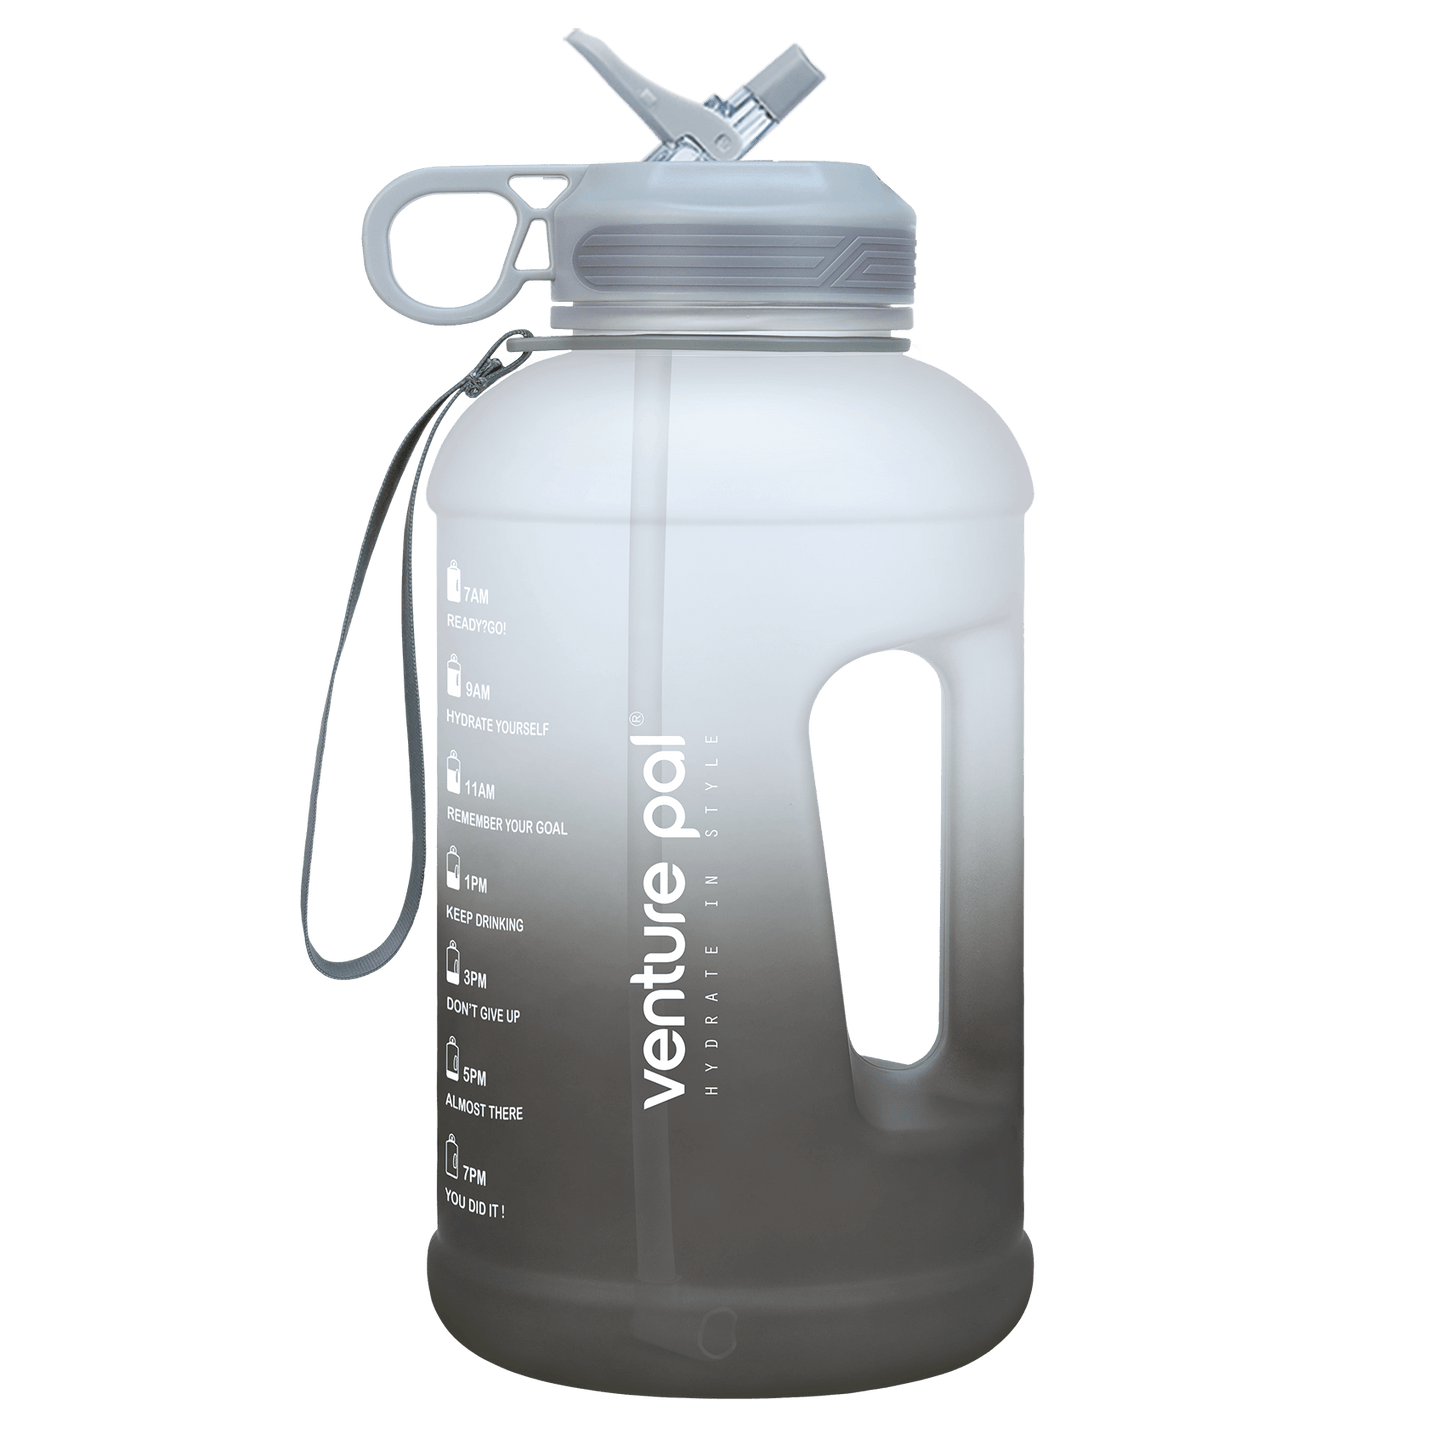 Stephon Marbury's Venture Pal 74oz Motivational Water Bottle